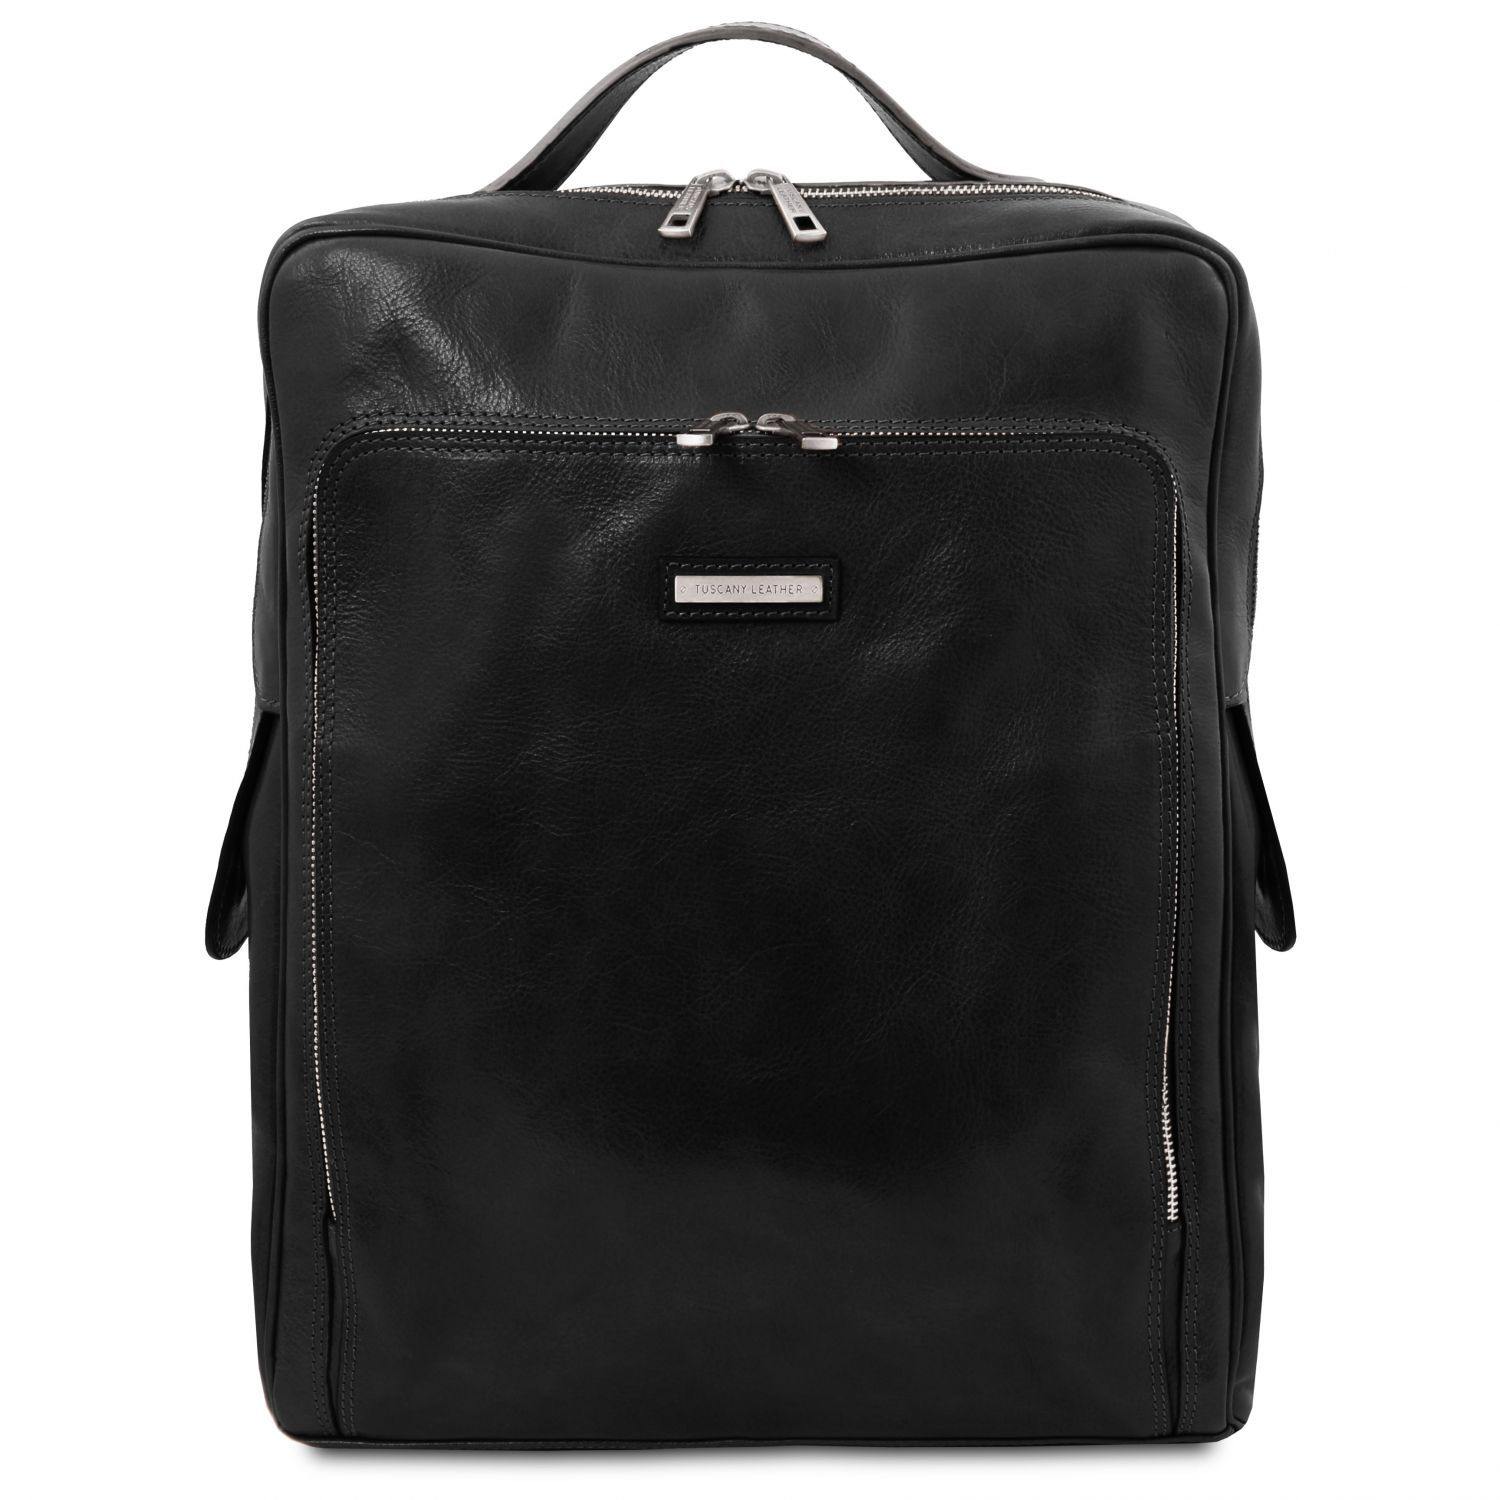 Bangkok - Leather laptop backpack - Large size | TL141987 – San Rocco ...